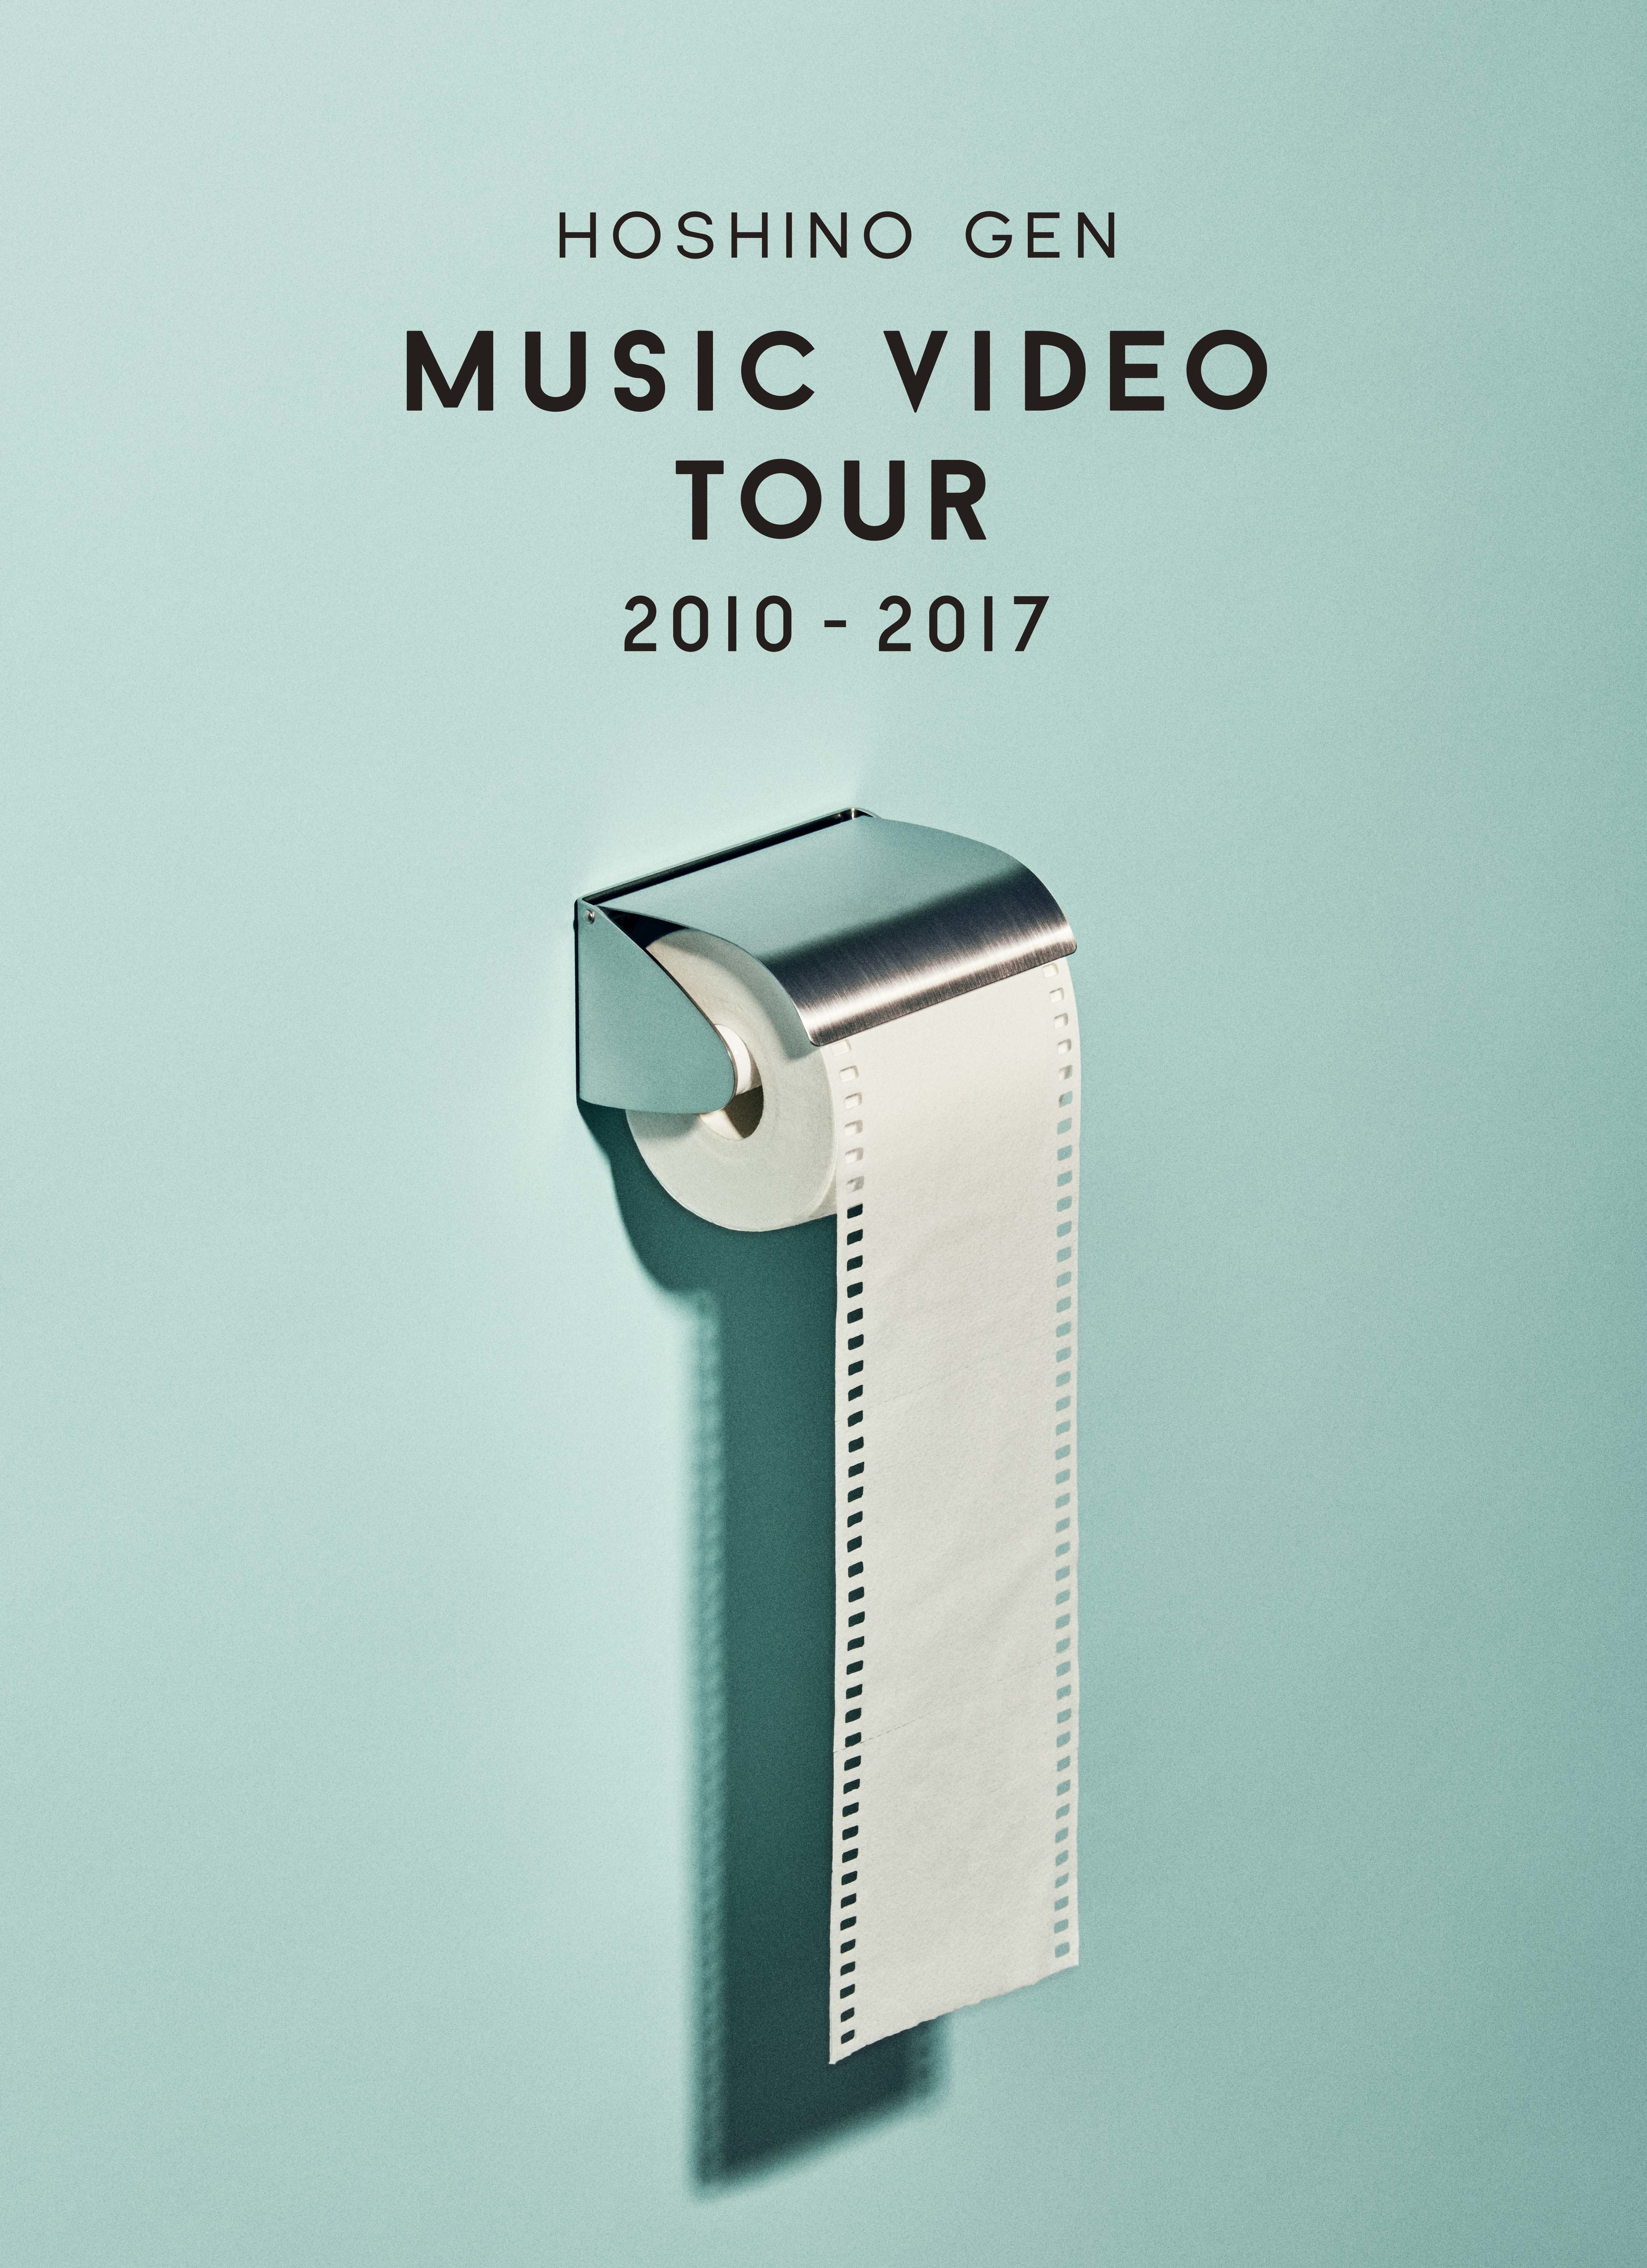 星野源 『Music Video Tour 2010-2017』